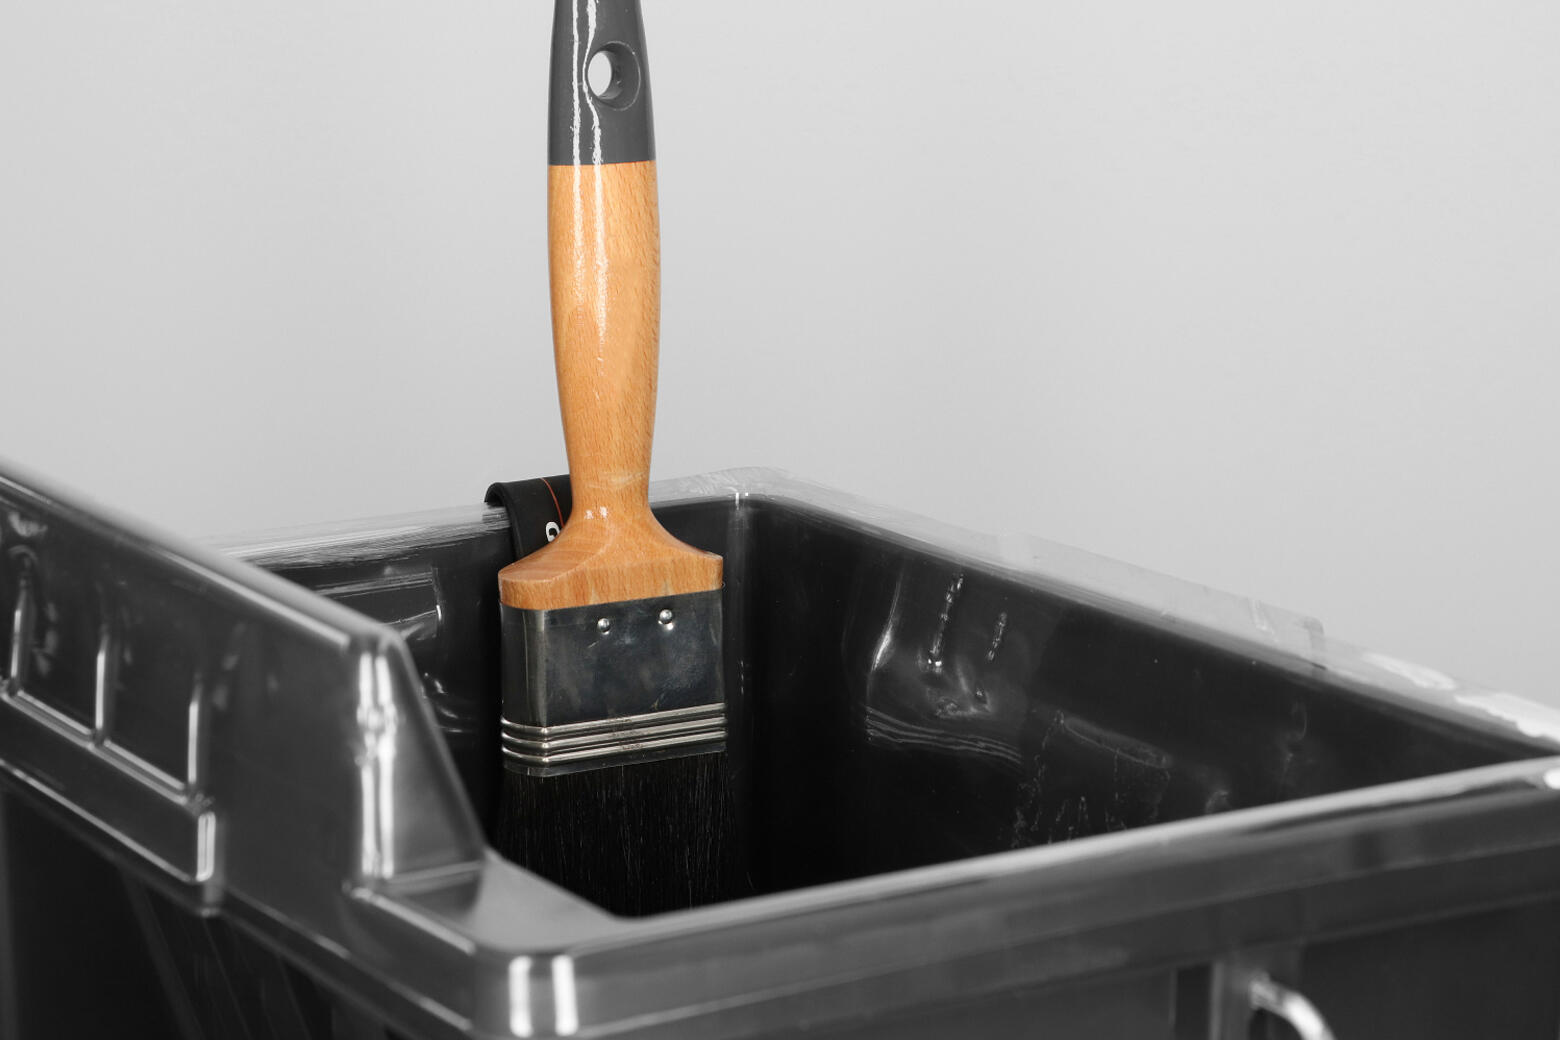 The Brush Magnet easily holds a paint brush